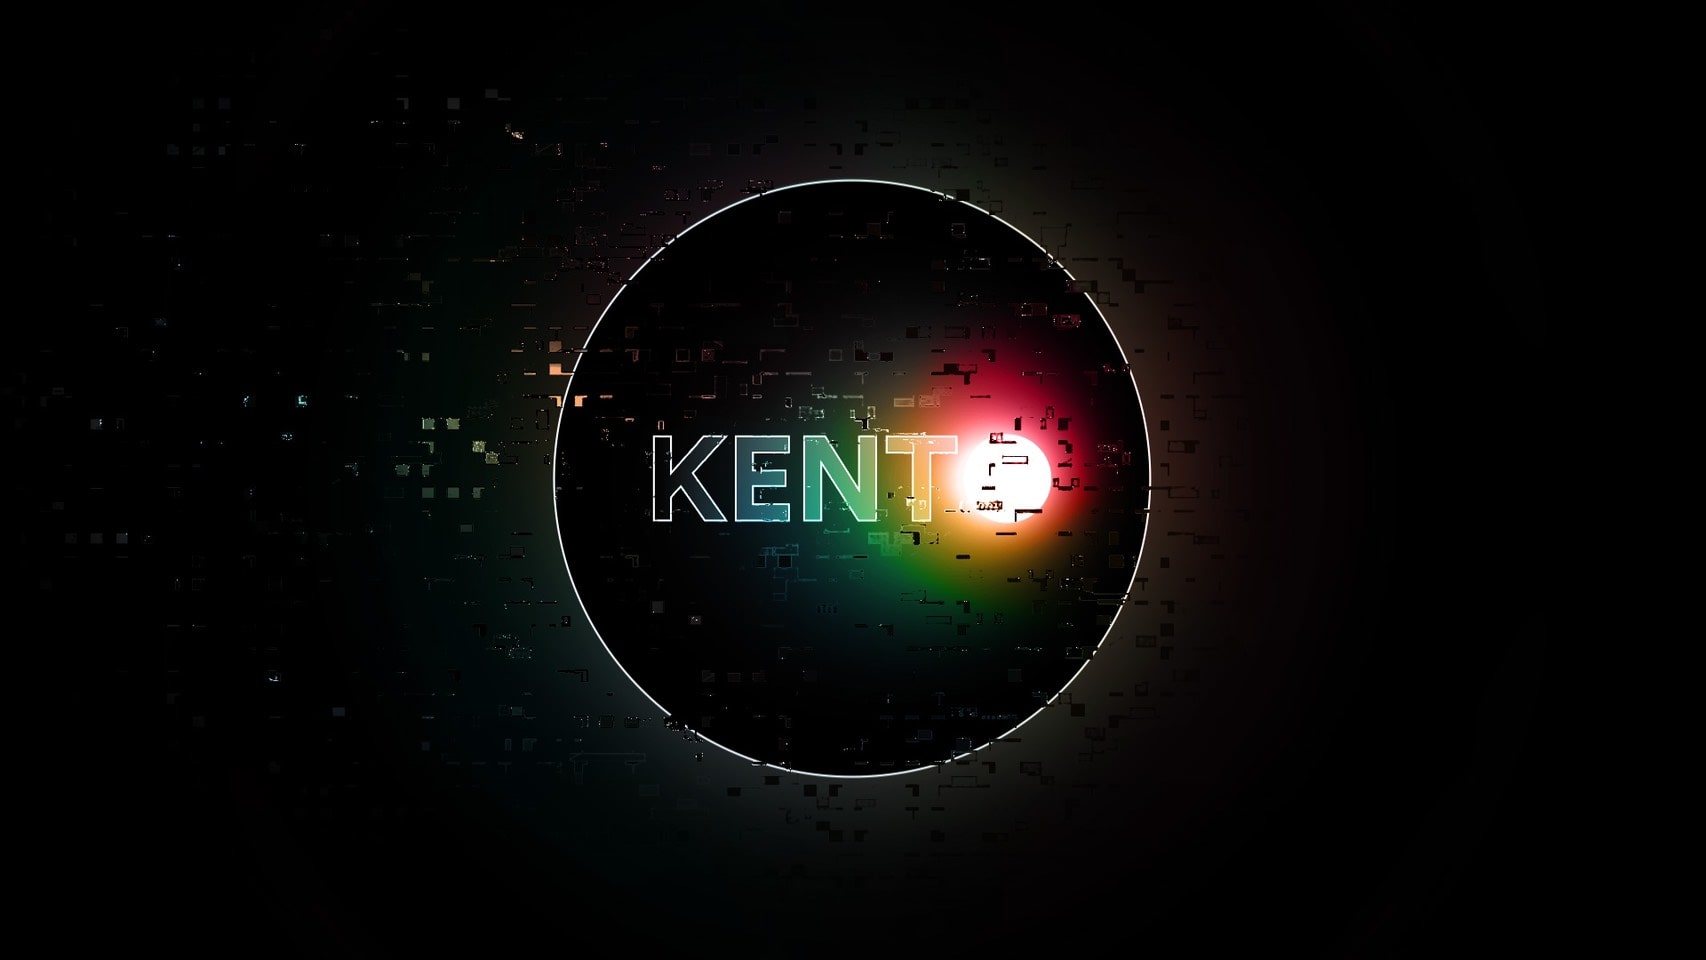 KENTO AR project - TECHNOLOGY